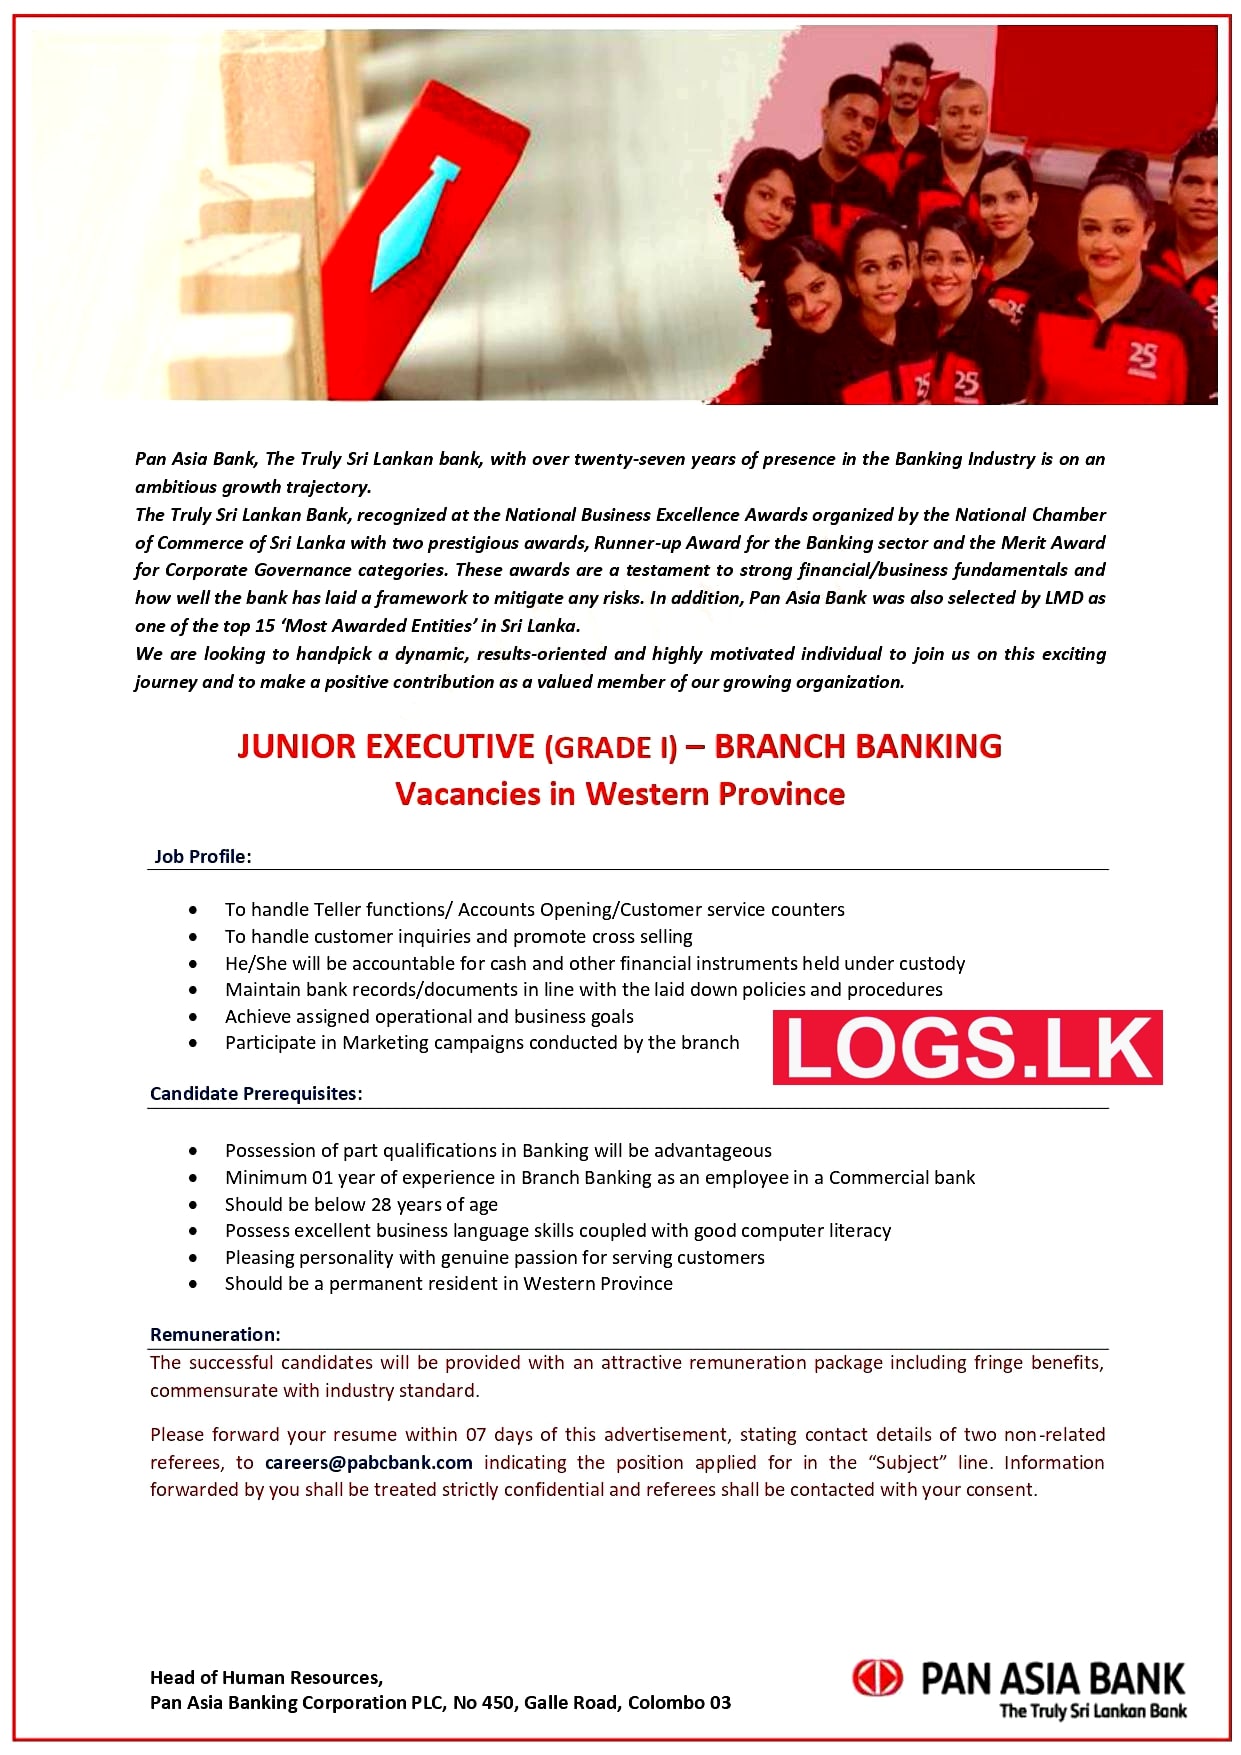 Junior Executive (Grade I) - Pan Asia Bank Vacancies 2023 Application Form Download